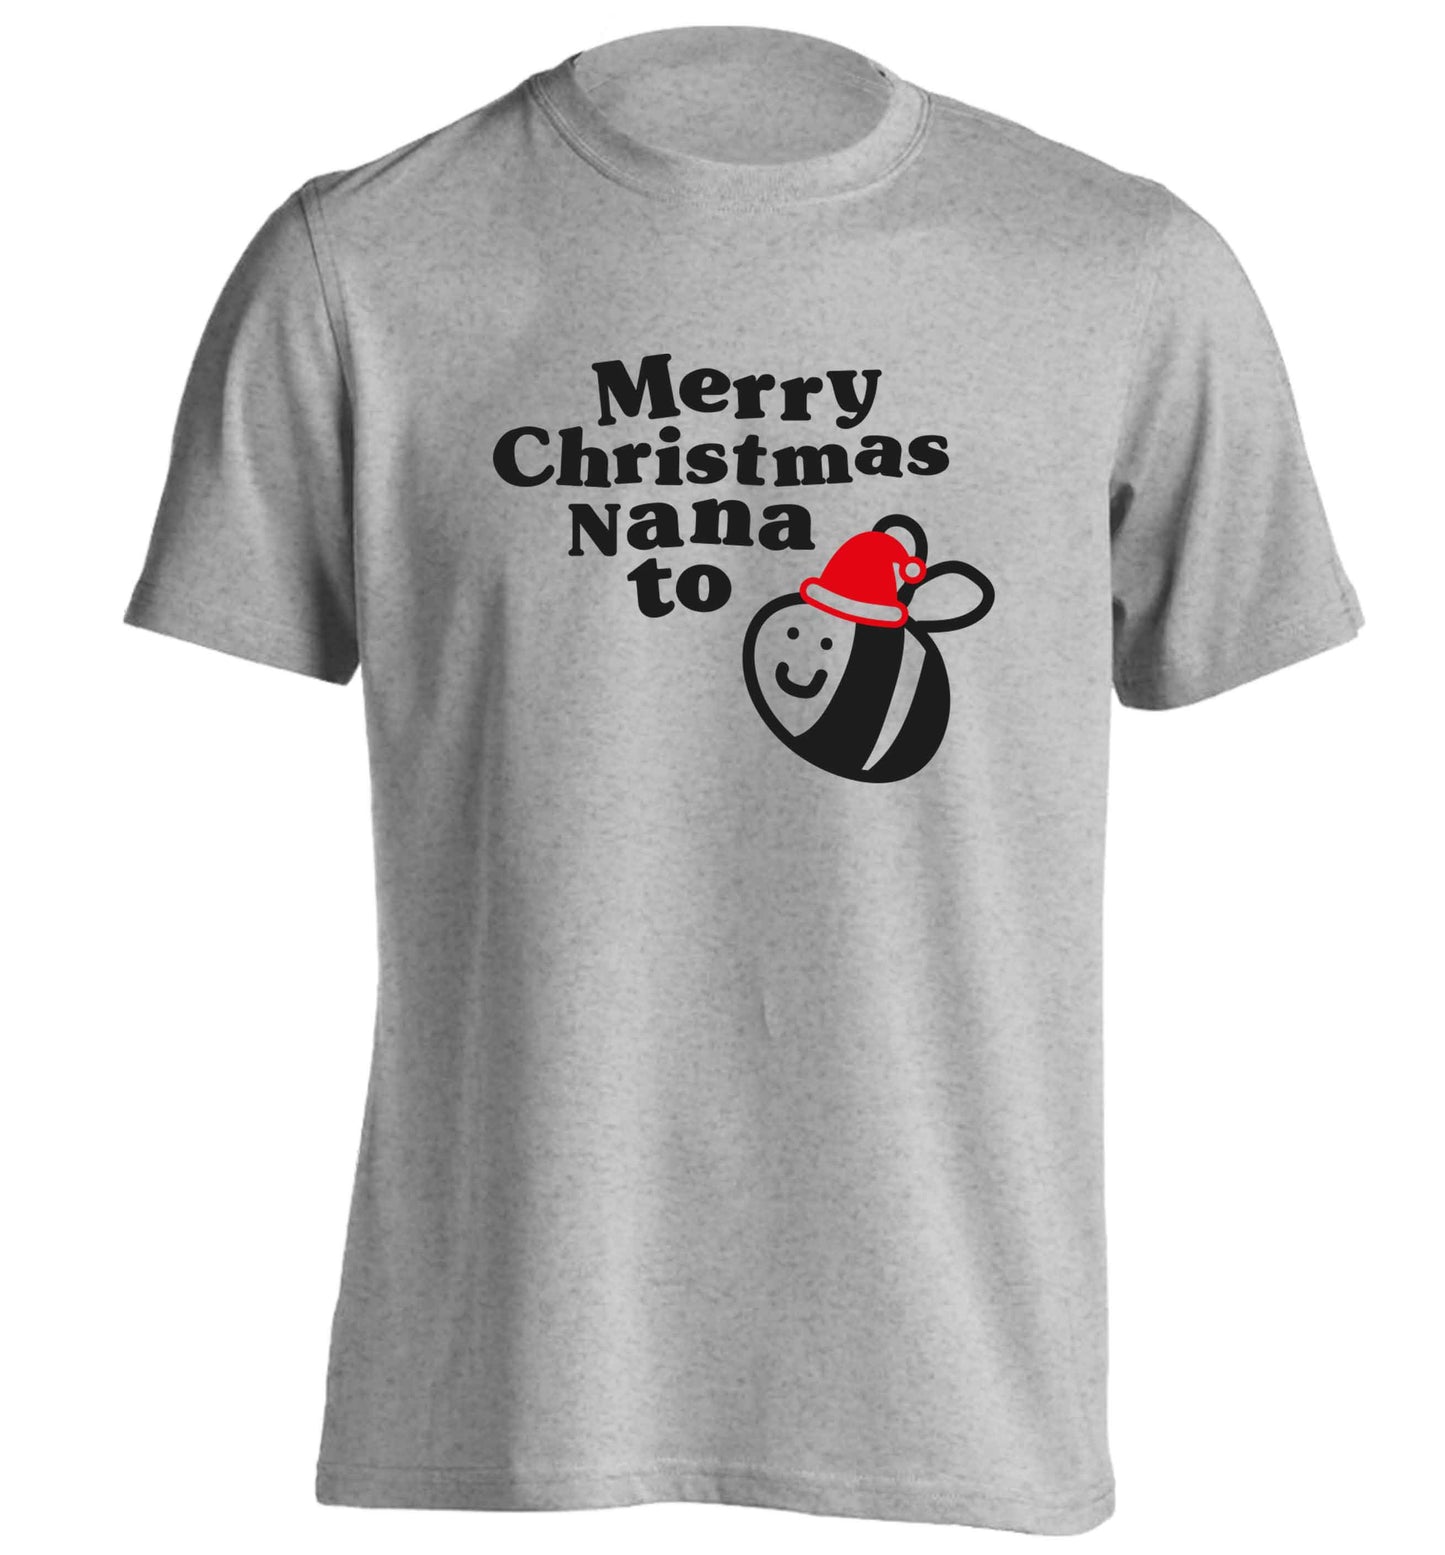 Merry Christmas nana to be adults unisex grey Tshirt 2XL